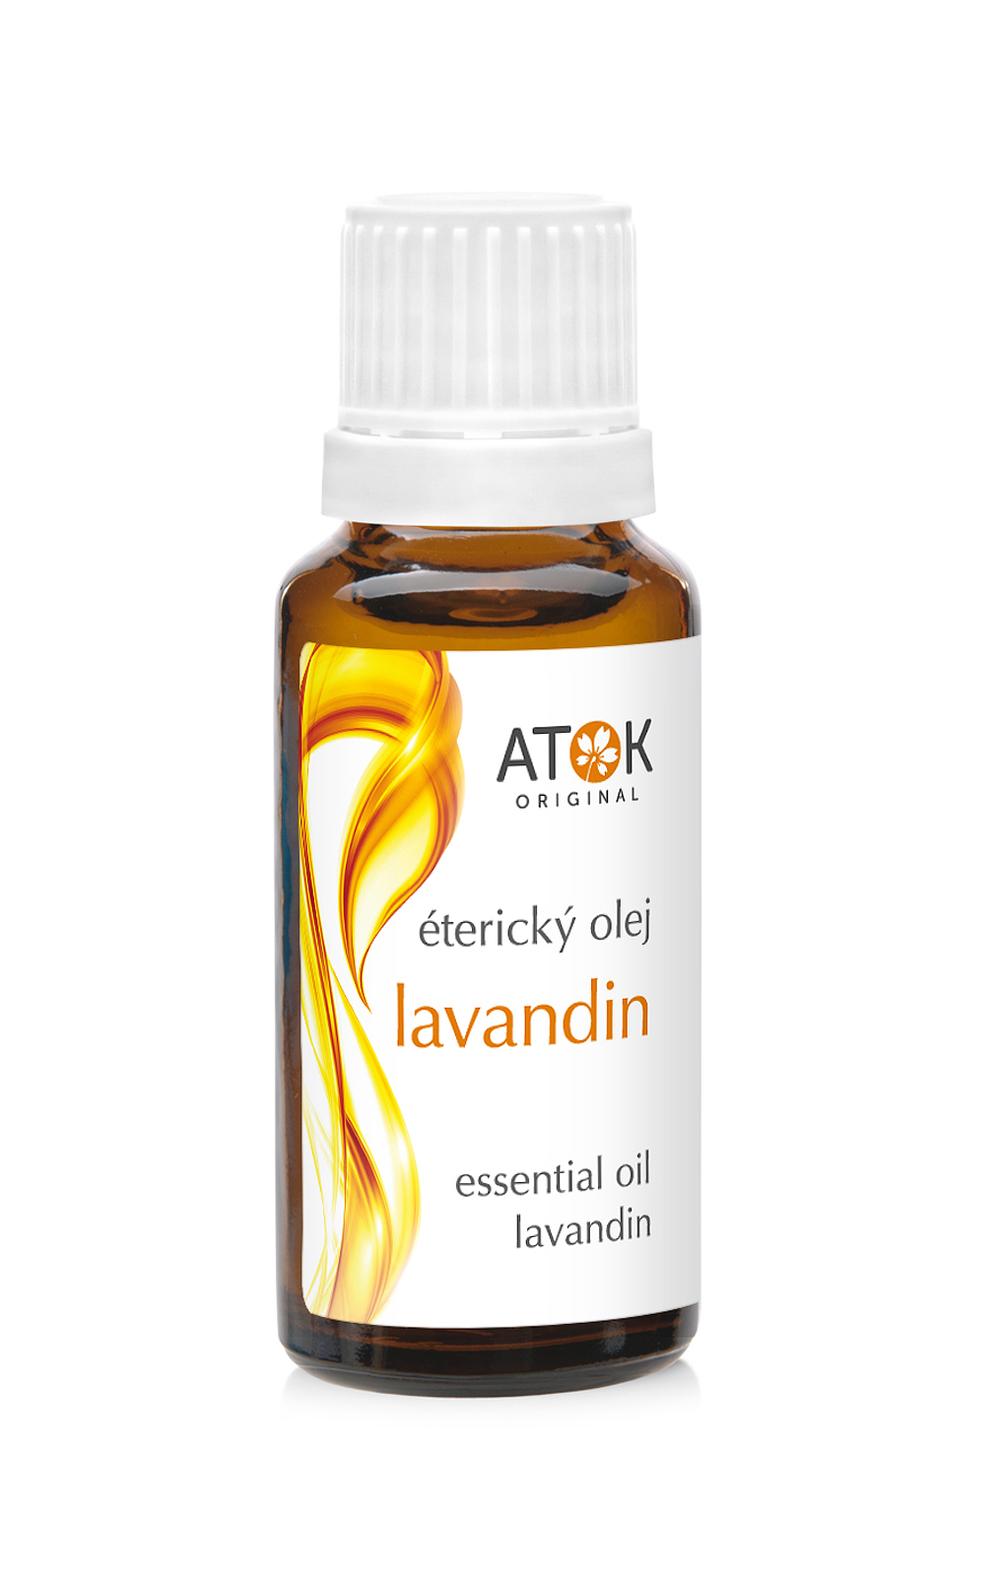 Éterický olej Lavandin - Original ATOK Obsah: 20 ml